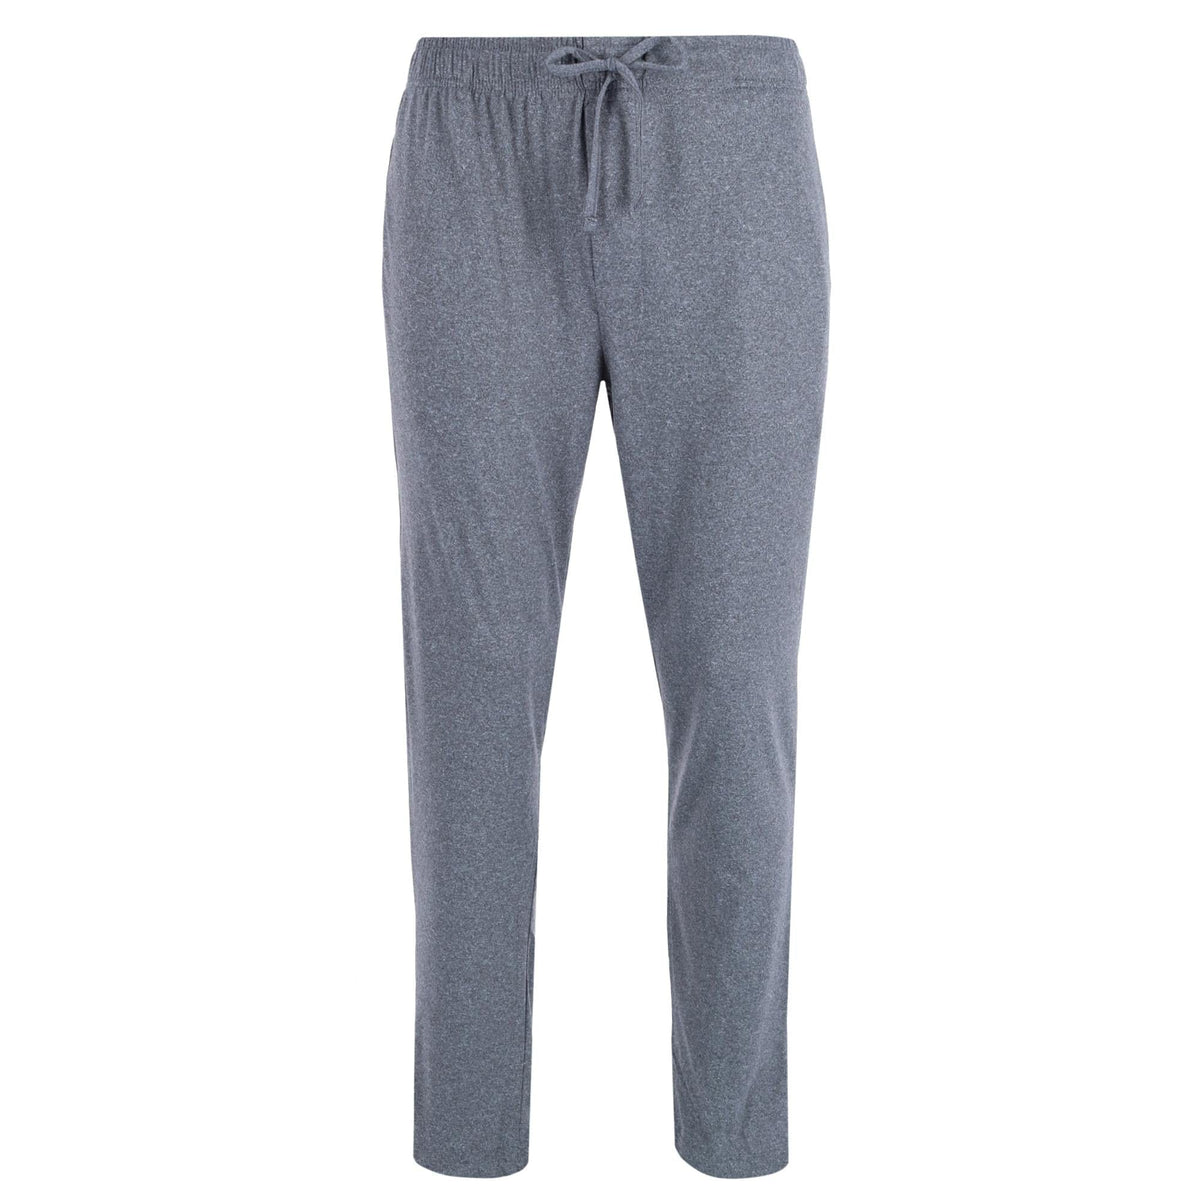 Hanes Men's Fleece Pajama Pants, Medium, Red Buffalo Plaid 